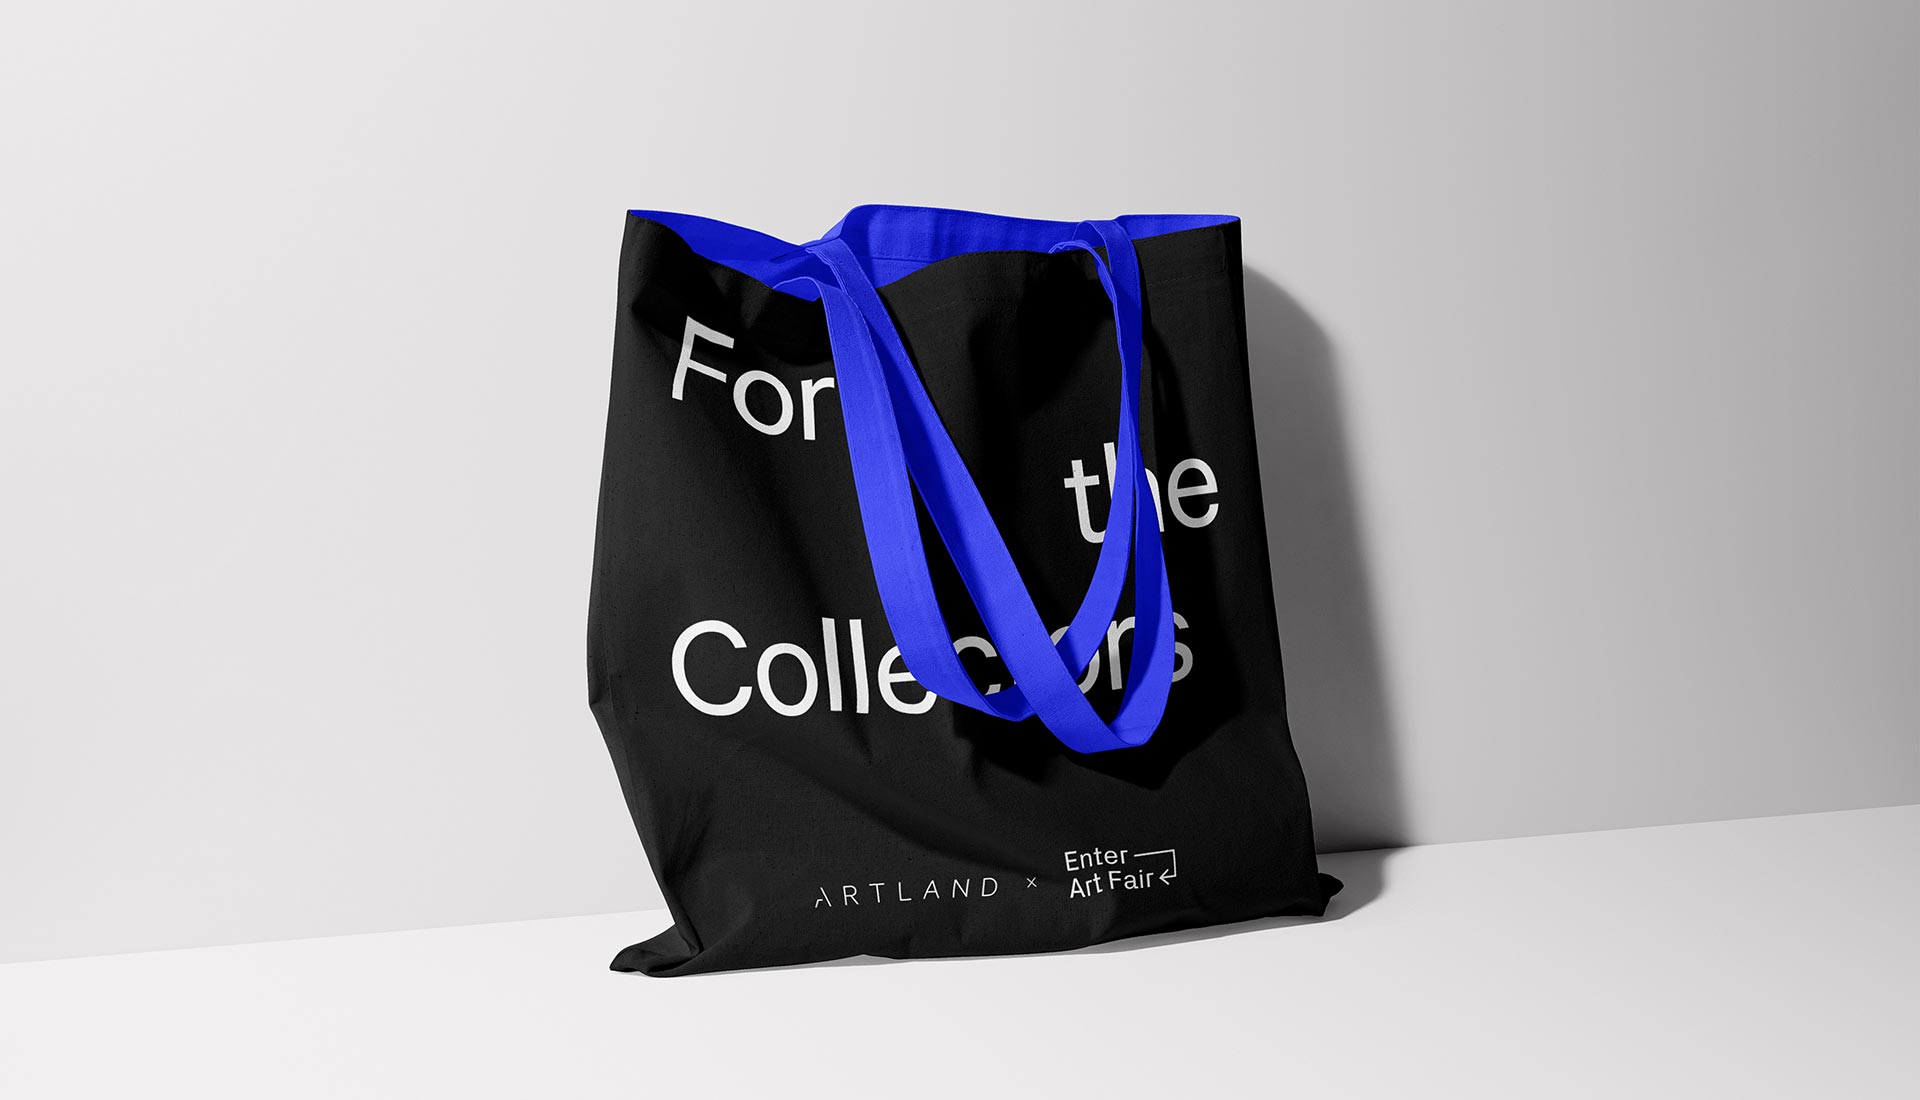 Artland tote bag design featuring a collaboration with Enter Art Fair